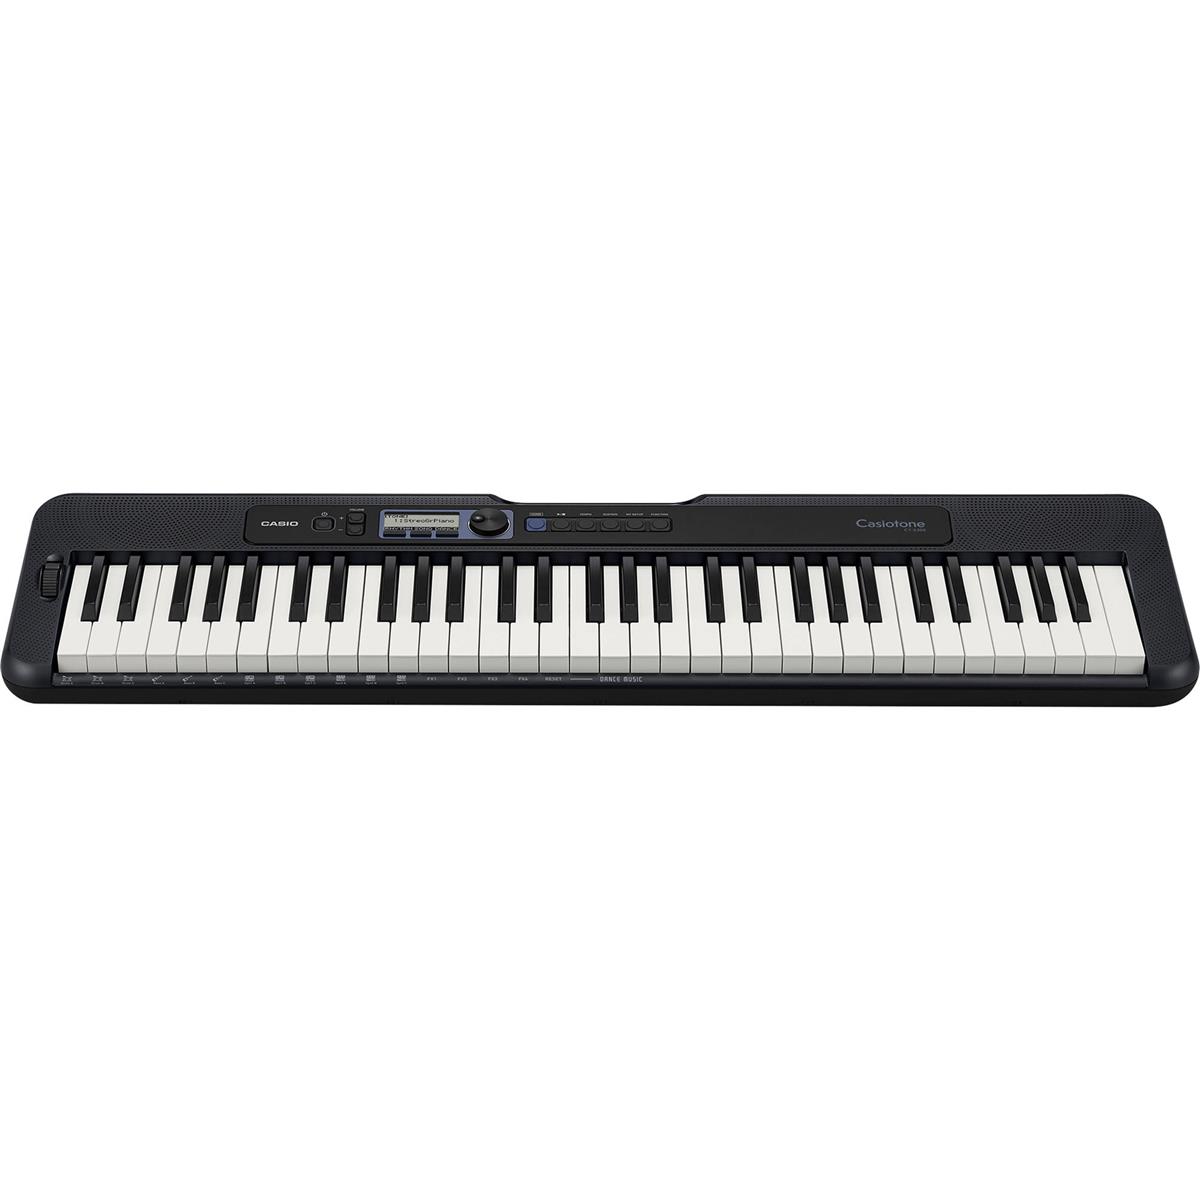 Casio CT-S300 61-Key Digital Piano Style Portable Keyboard $119 + free s/h